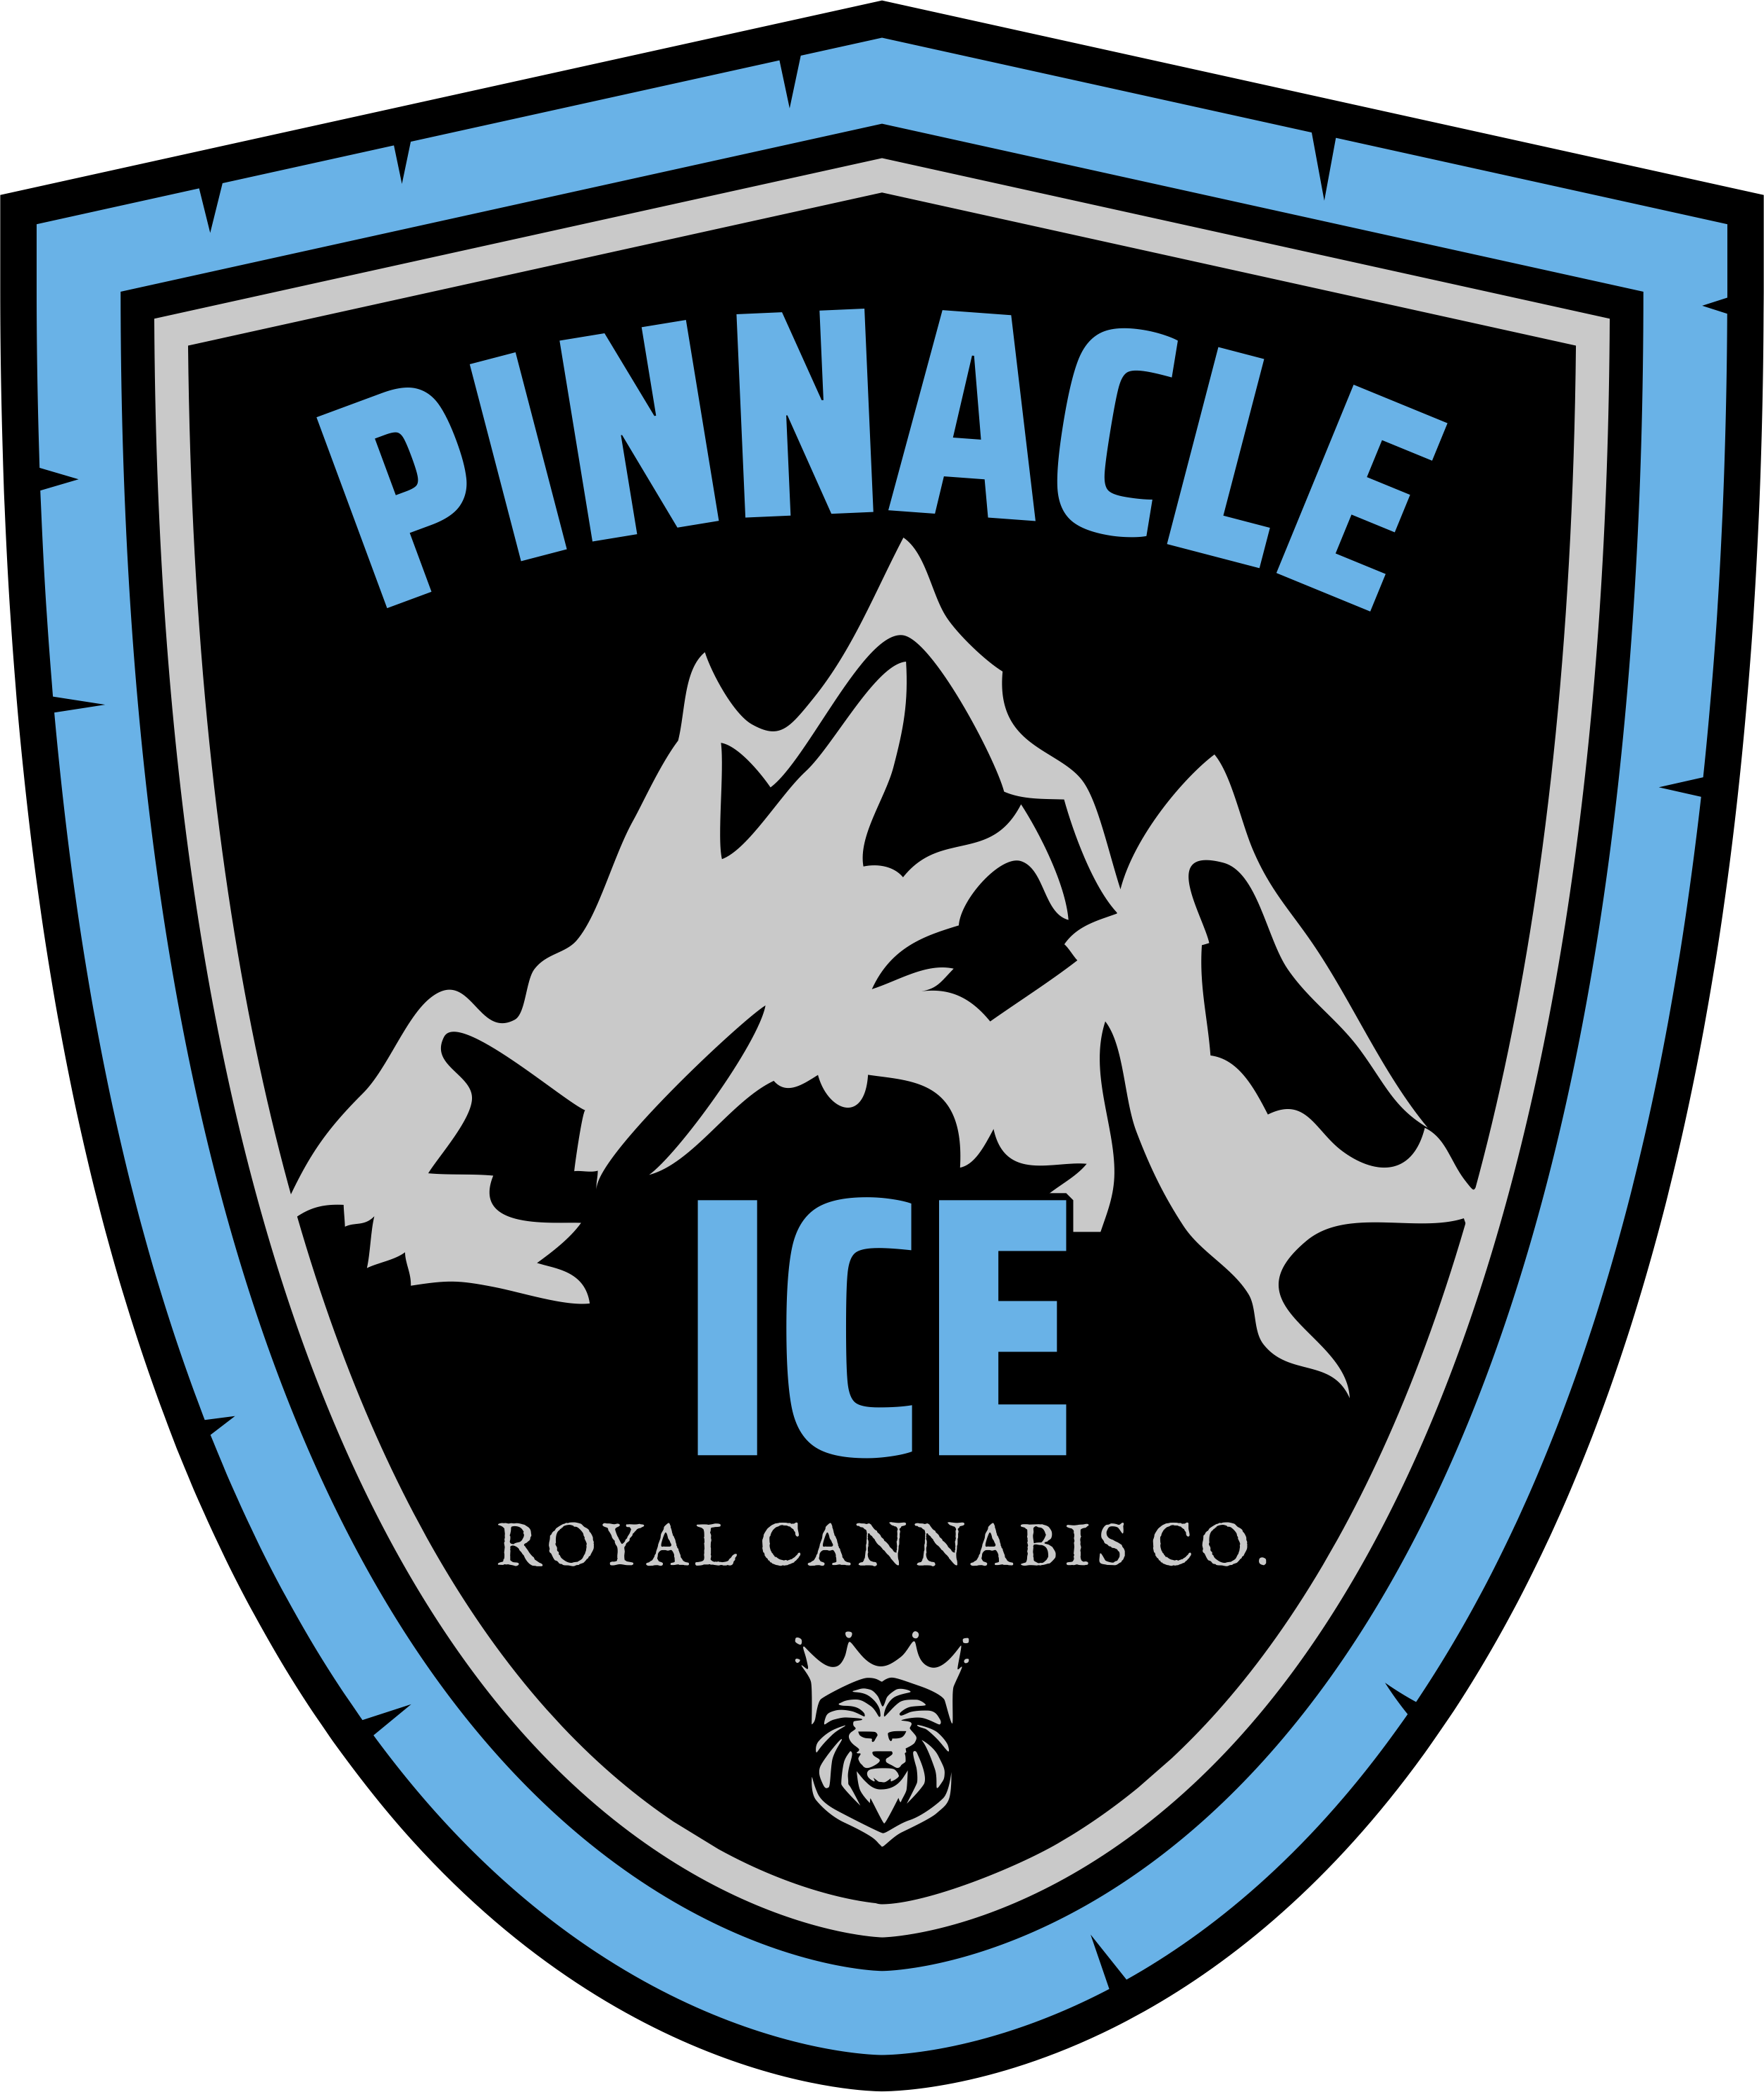 No Logo for Pinnacle Ice